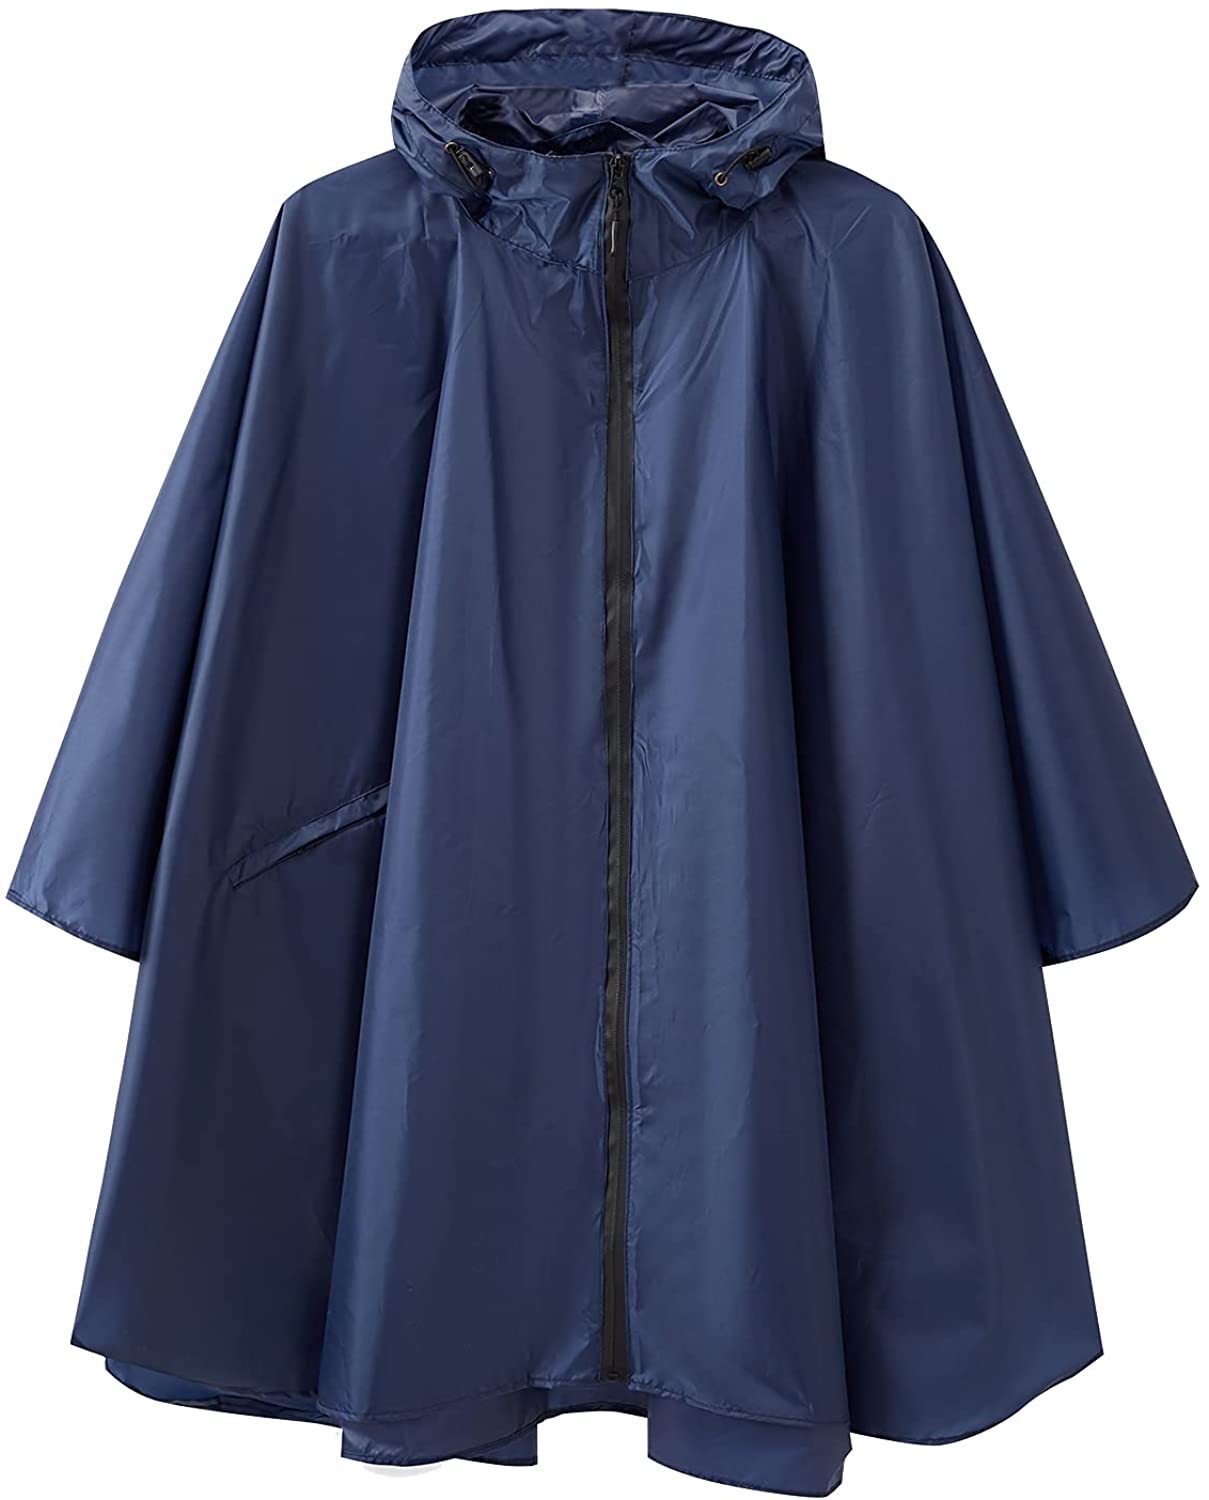 Details about   Fashion waterproof  raincoat jacket portable hood cape poncho rain coat  FW 